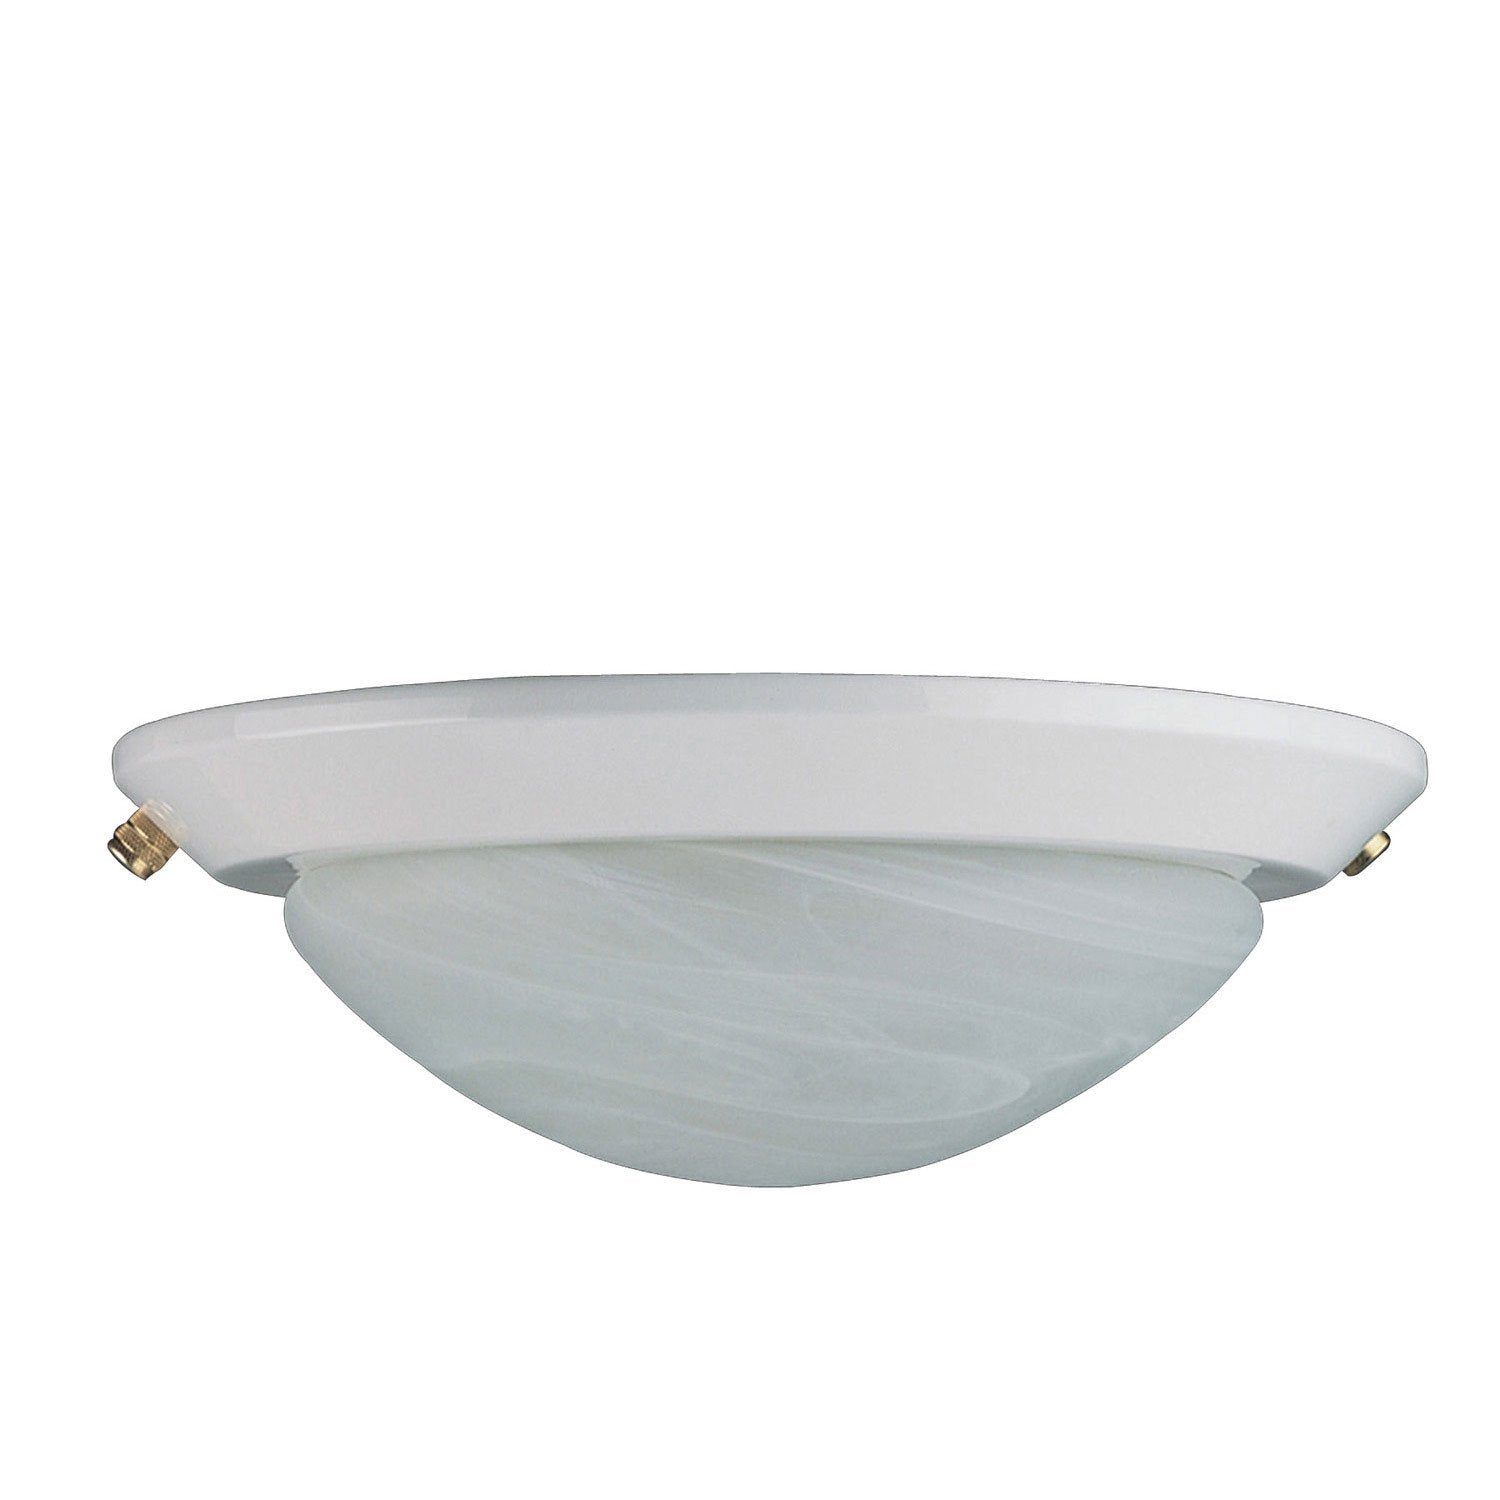 Concord Fans 2 Light White Finish Low Profile Ceiling Fan Light